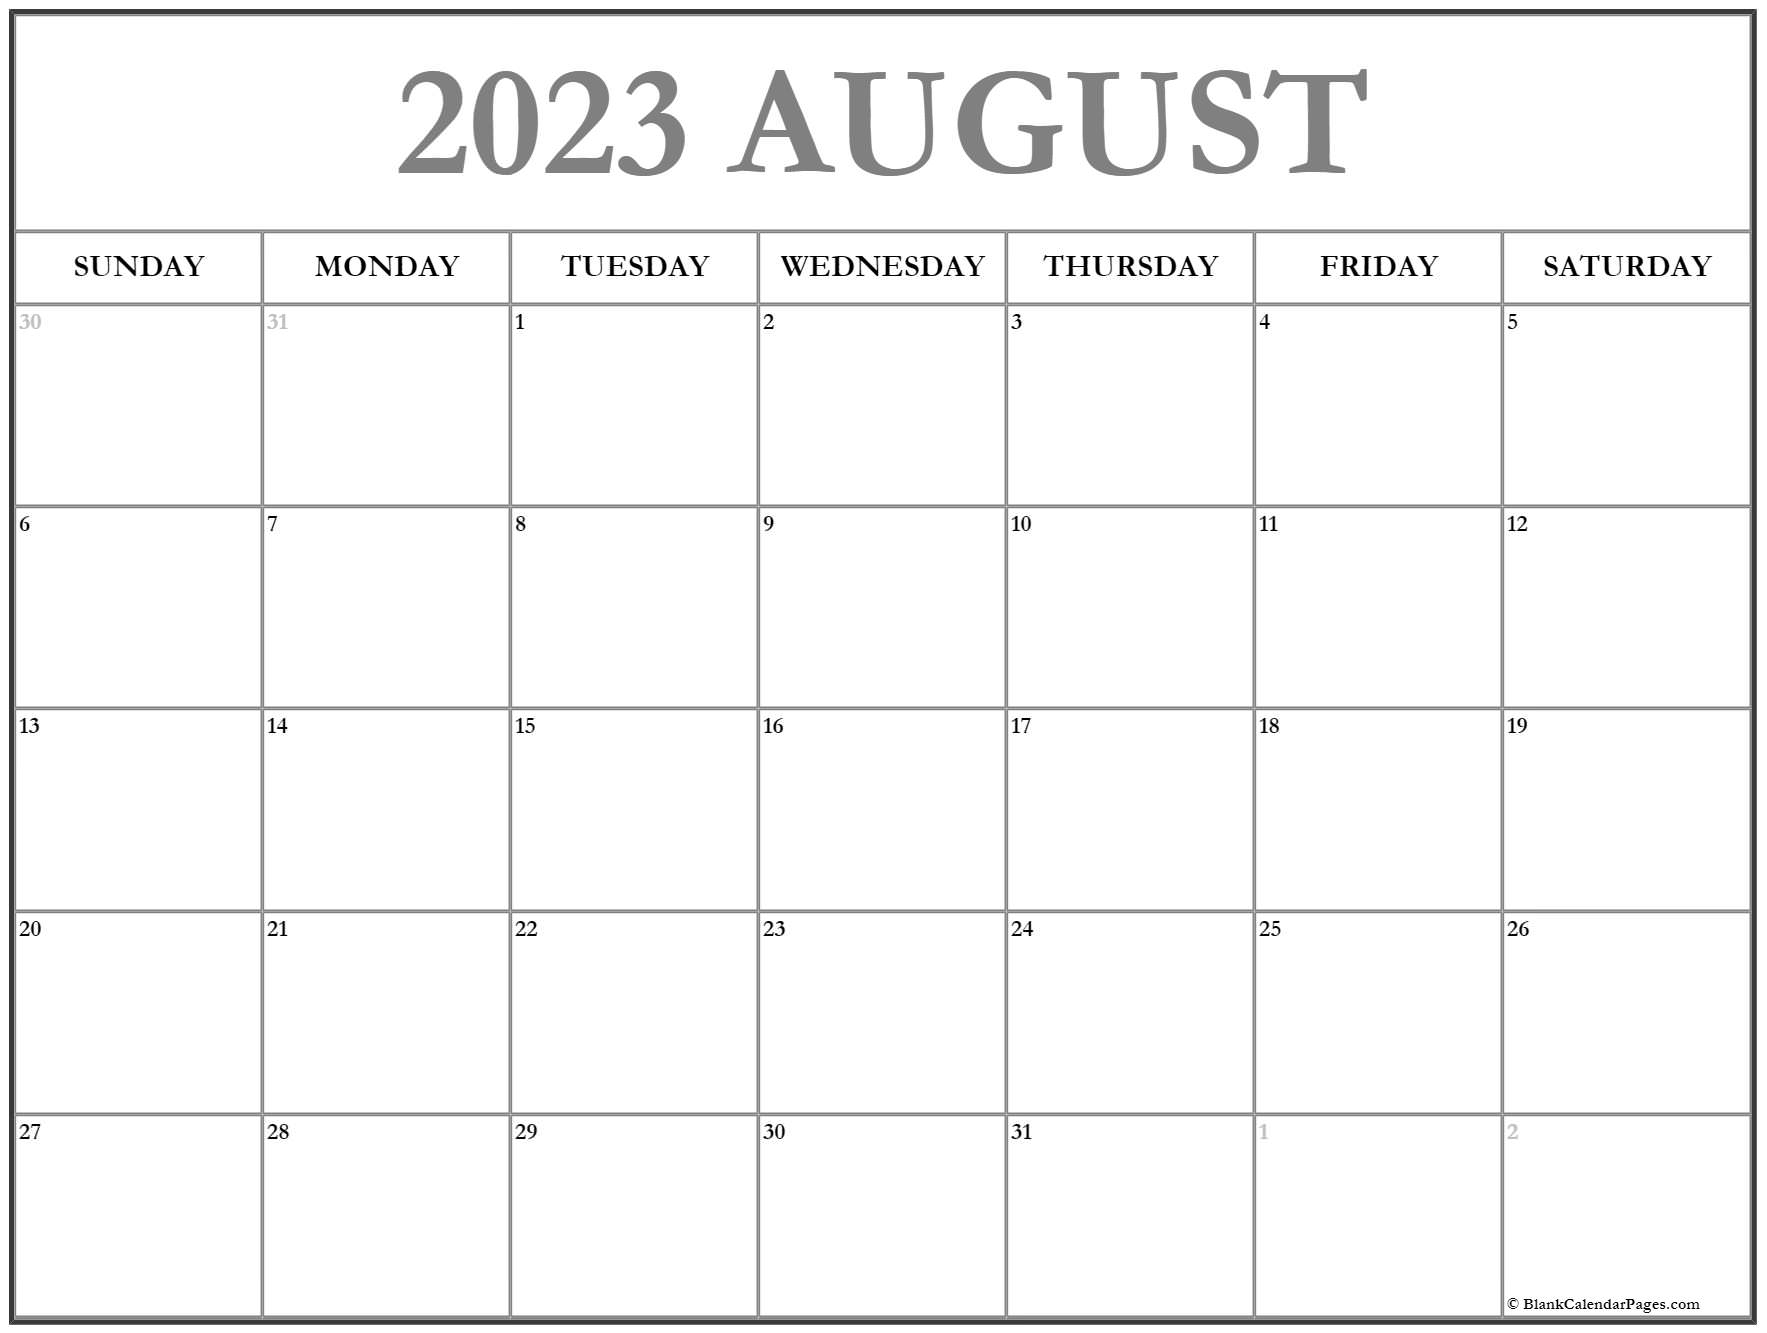 august-2023-calendar-free-printable-calendar-august-2023-calendar